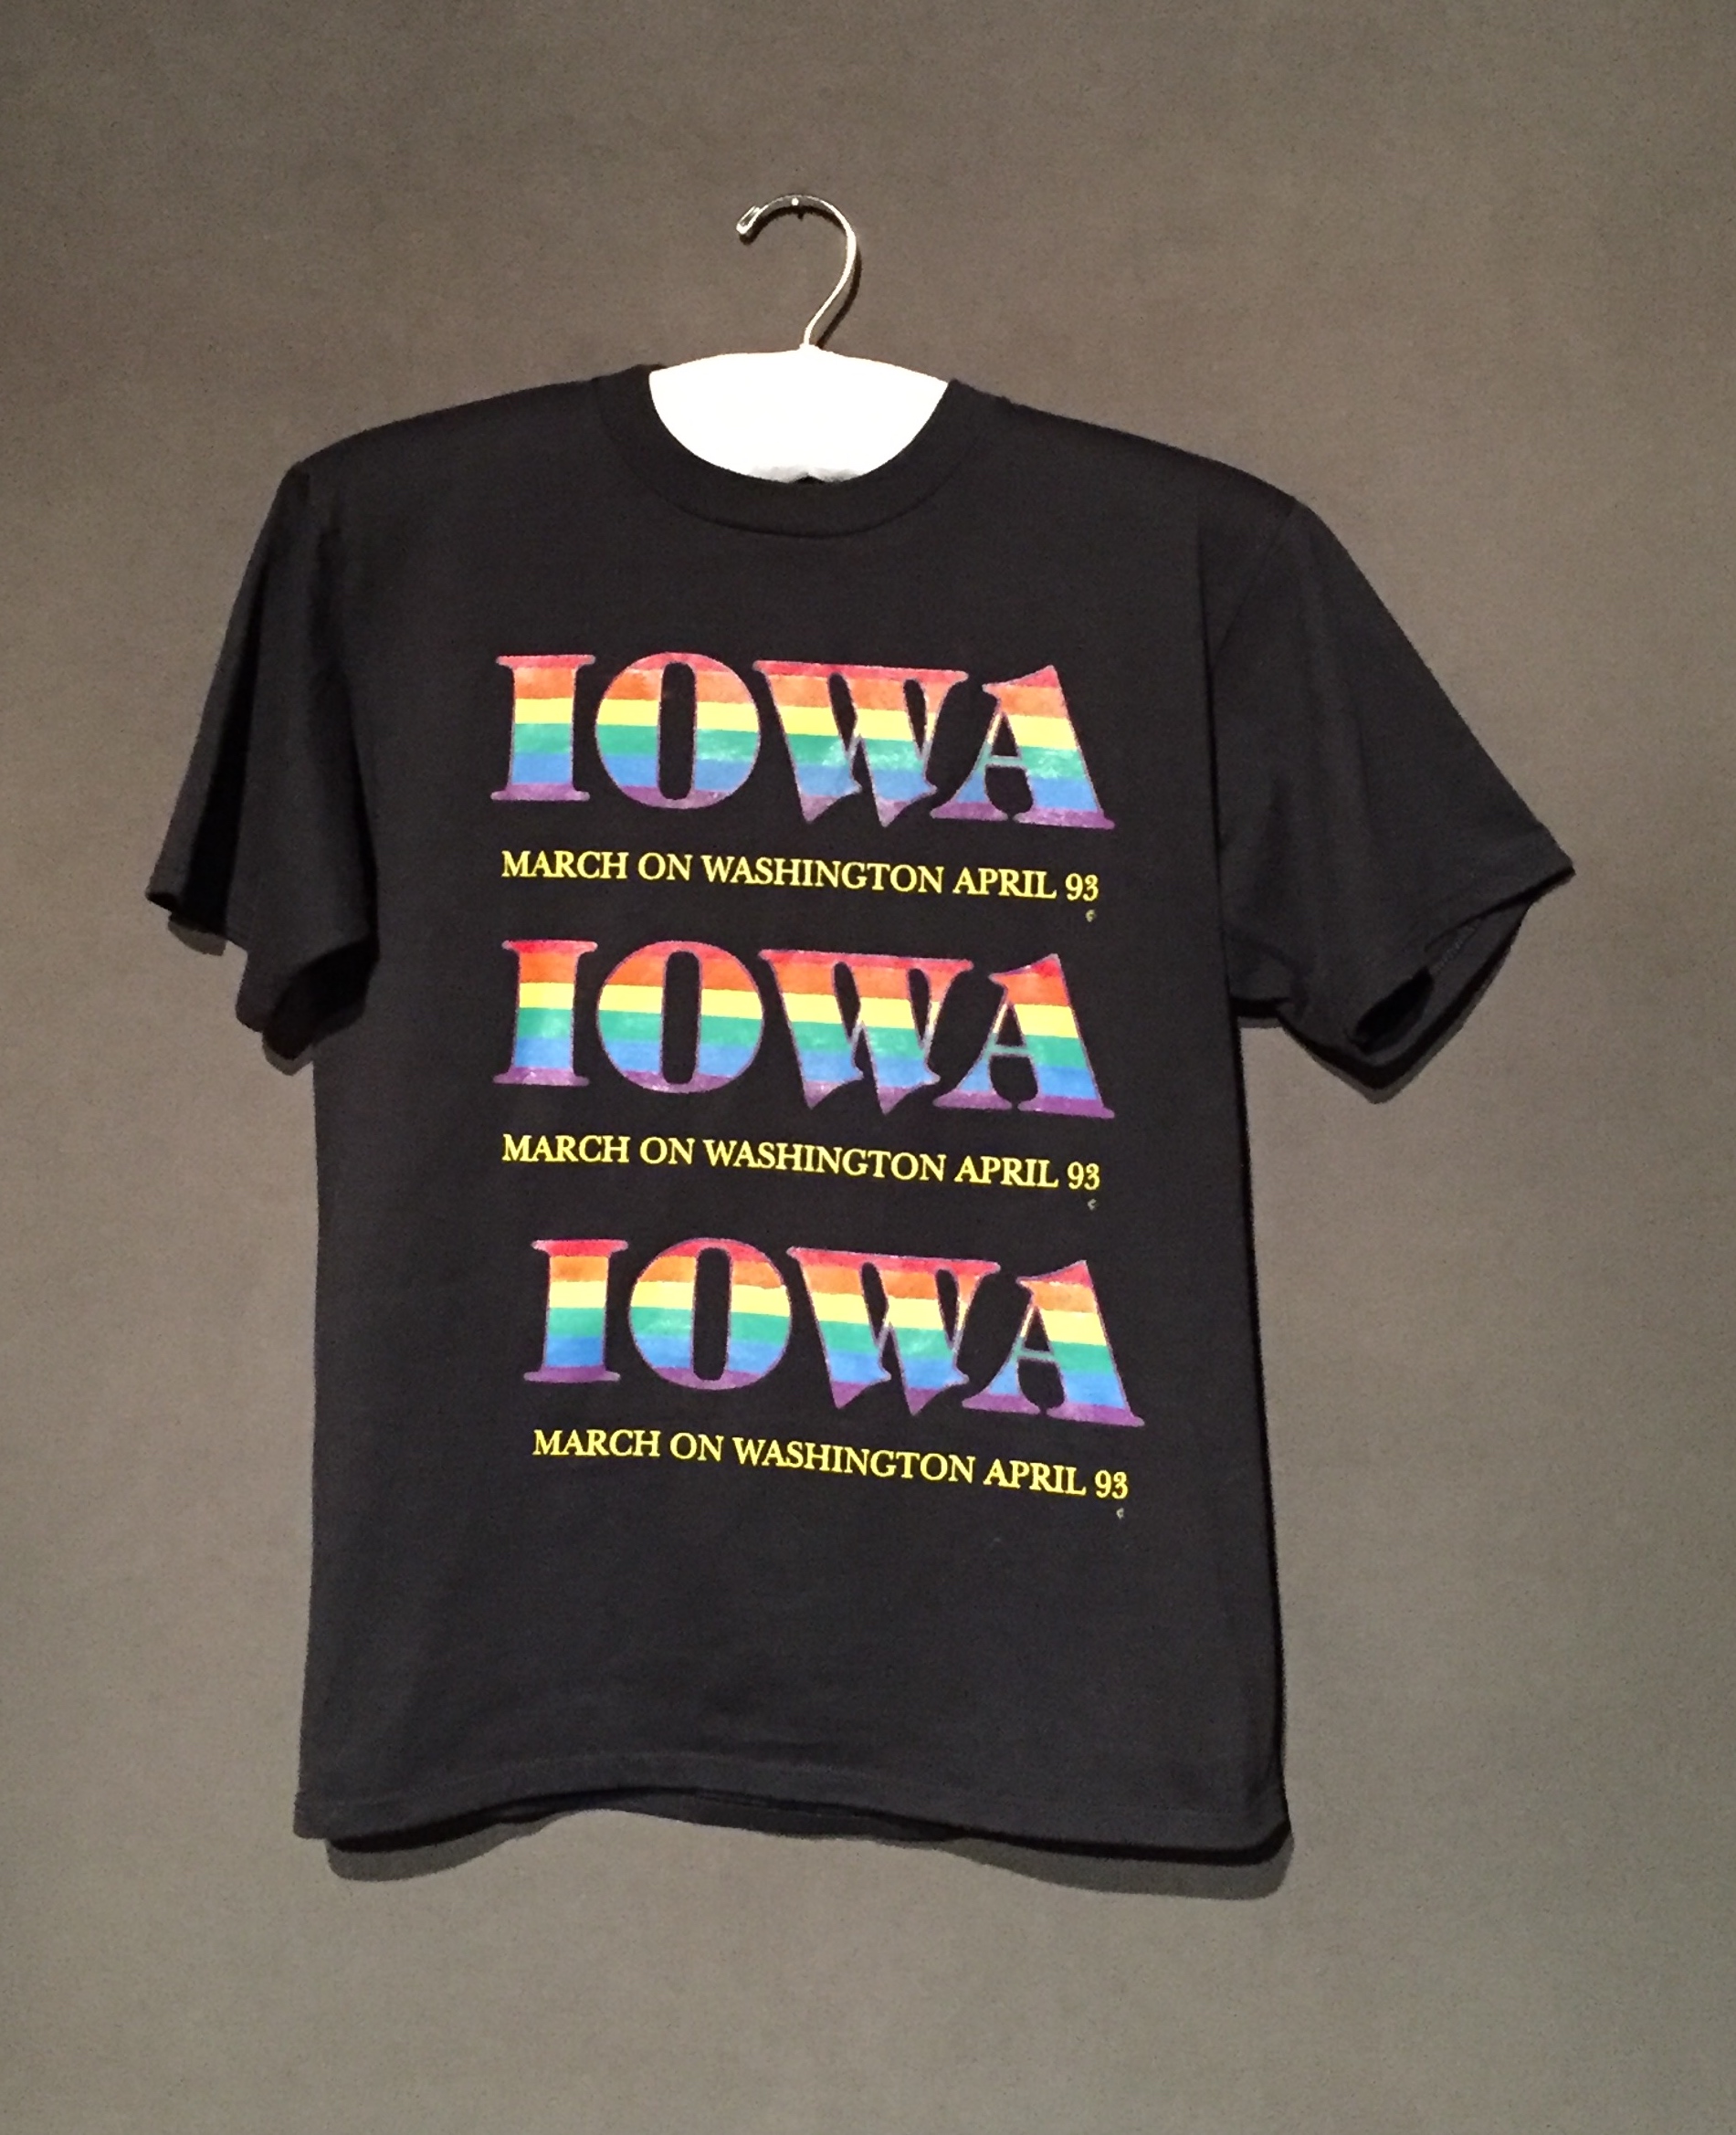 Black short sleeve t-shirt with rainbow lettering reading: "Iowa: March on Washington 93"